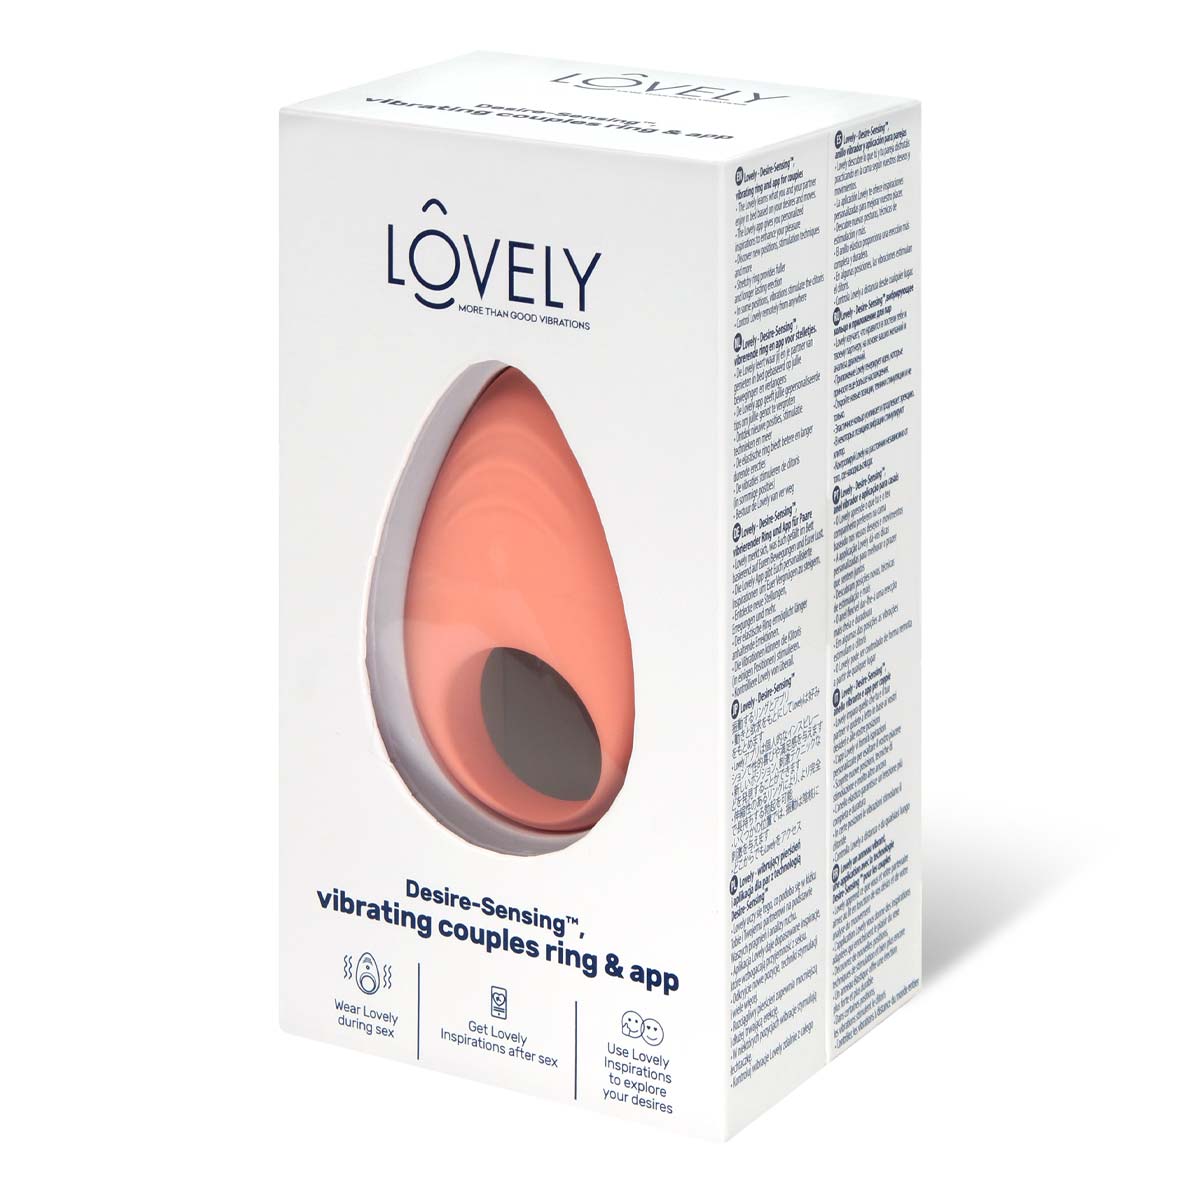 Lovely 2.0 Desire-Sensing™ Vibrating Couples Ring Soft Pink-p_1